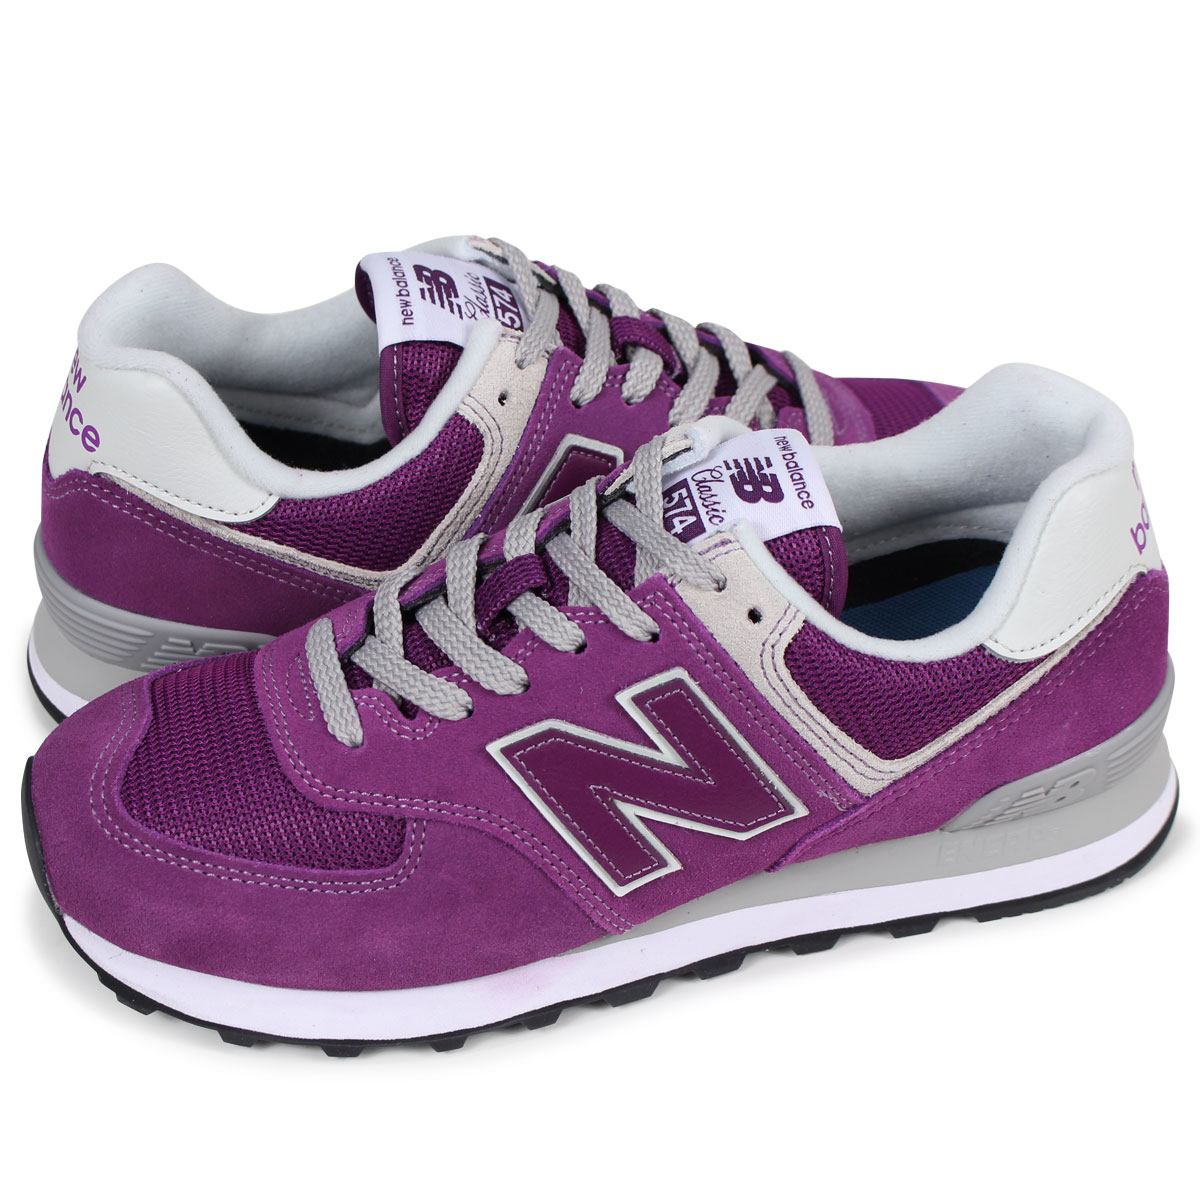 nb 574 violet cheap online